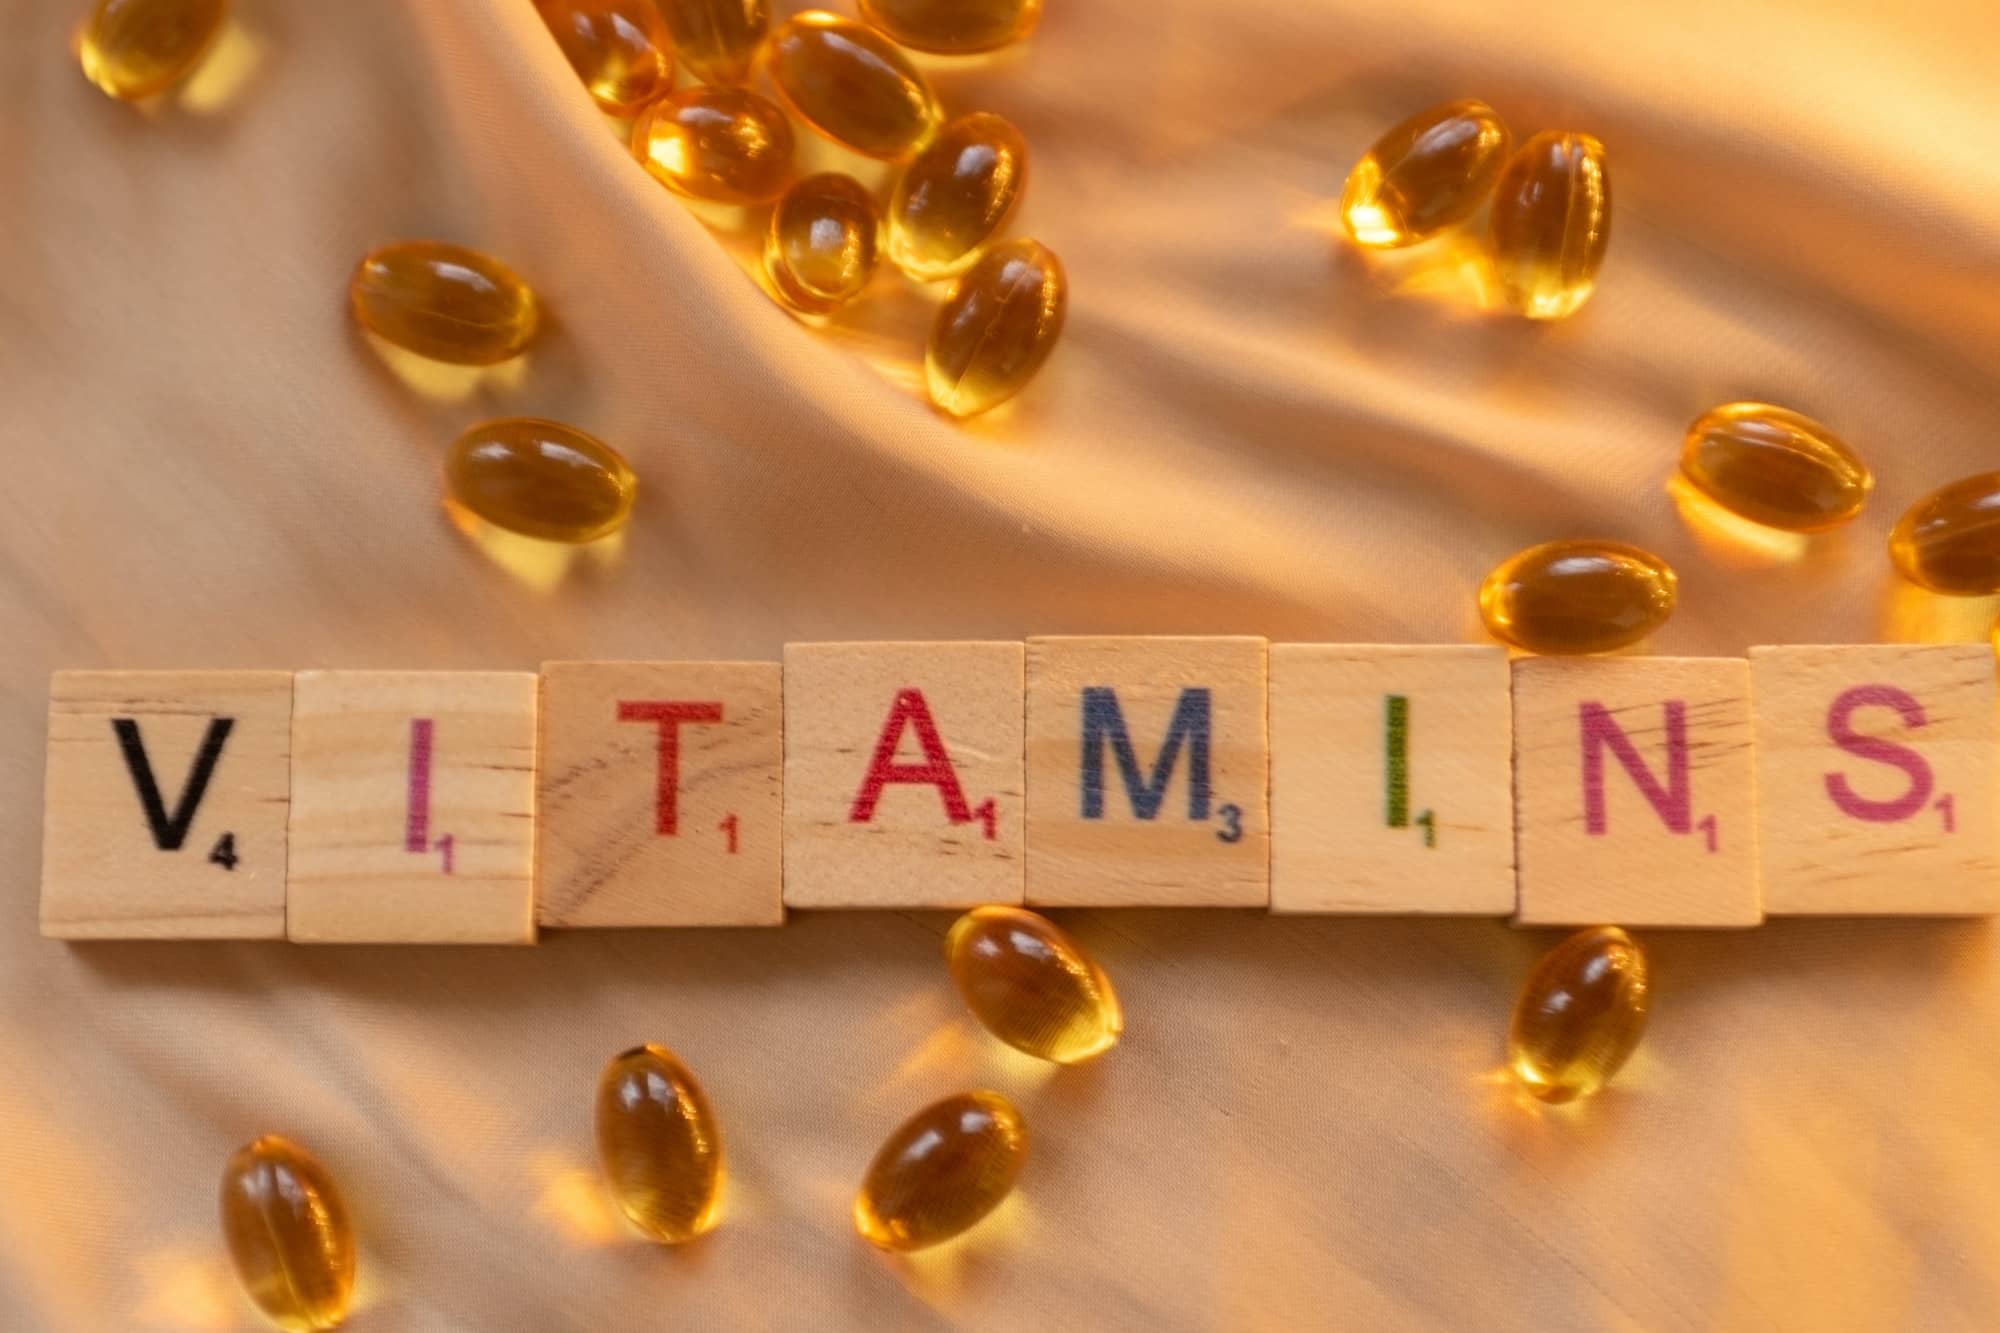 Vitamine and pills on satin background